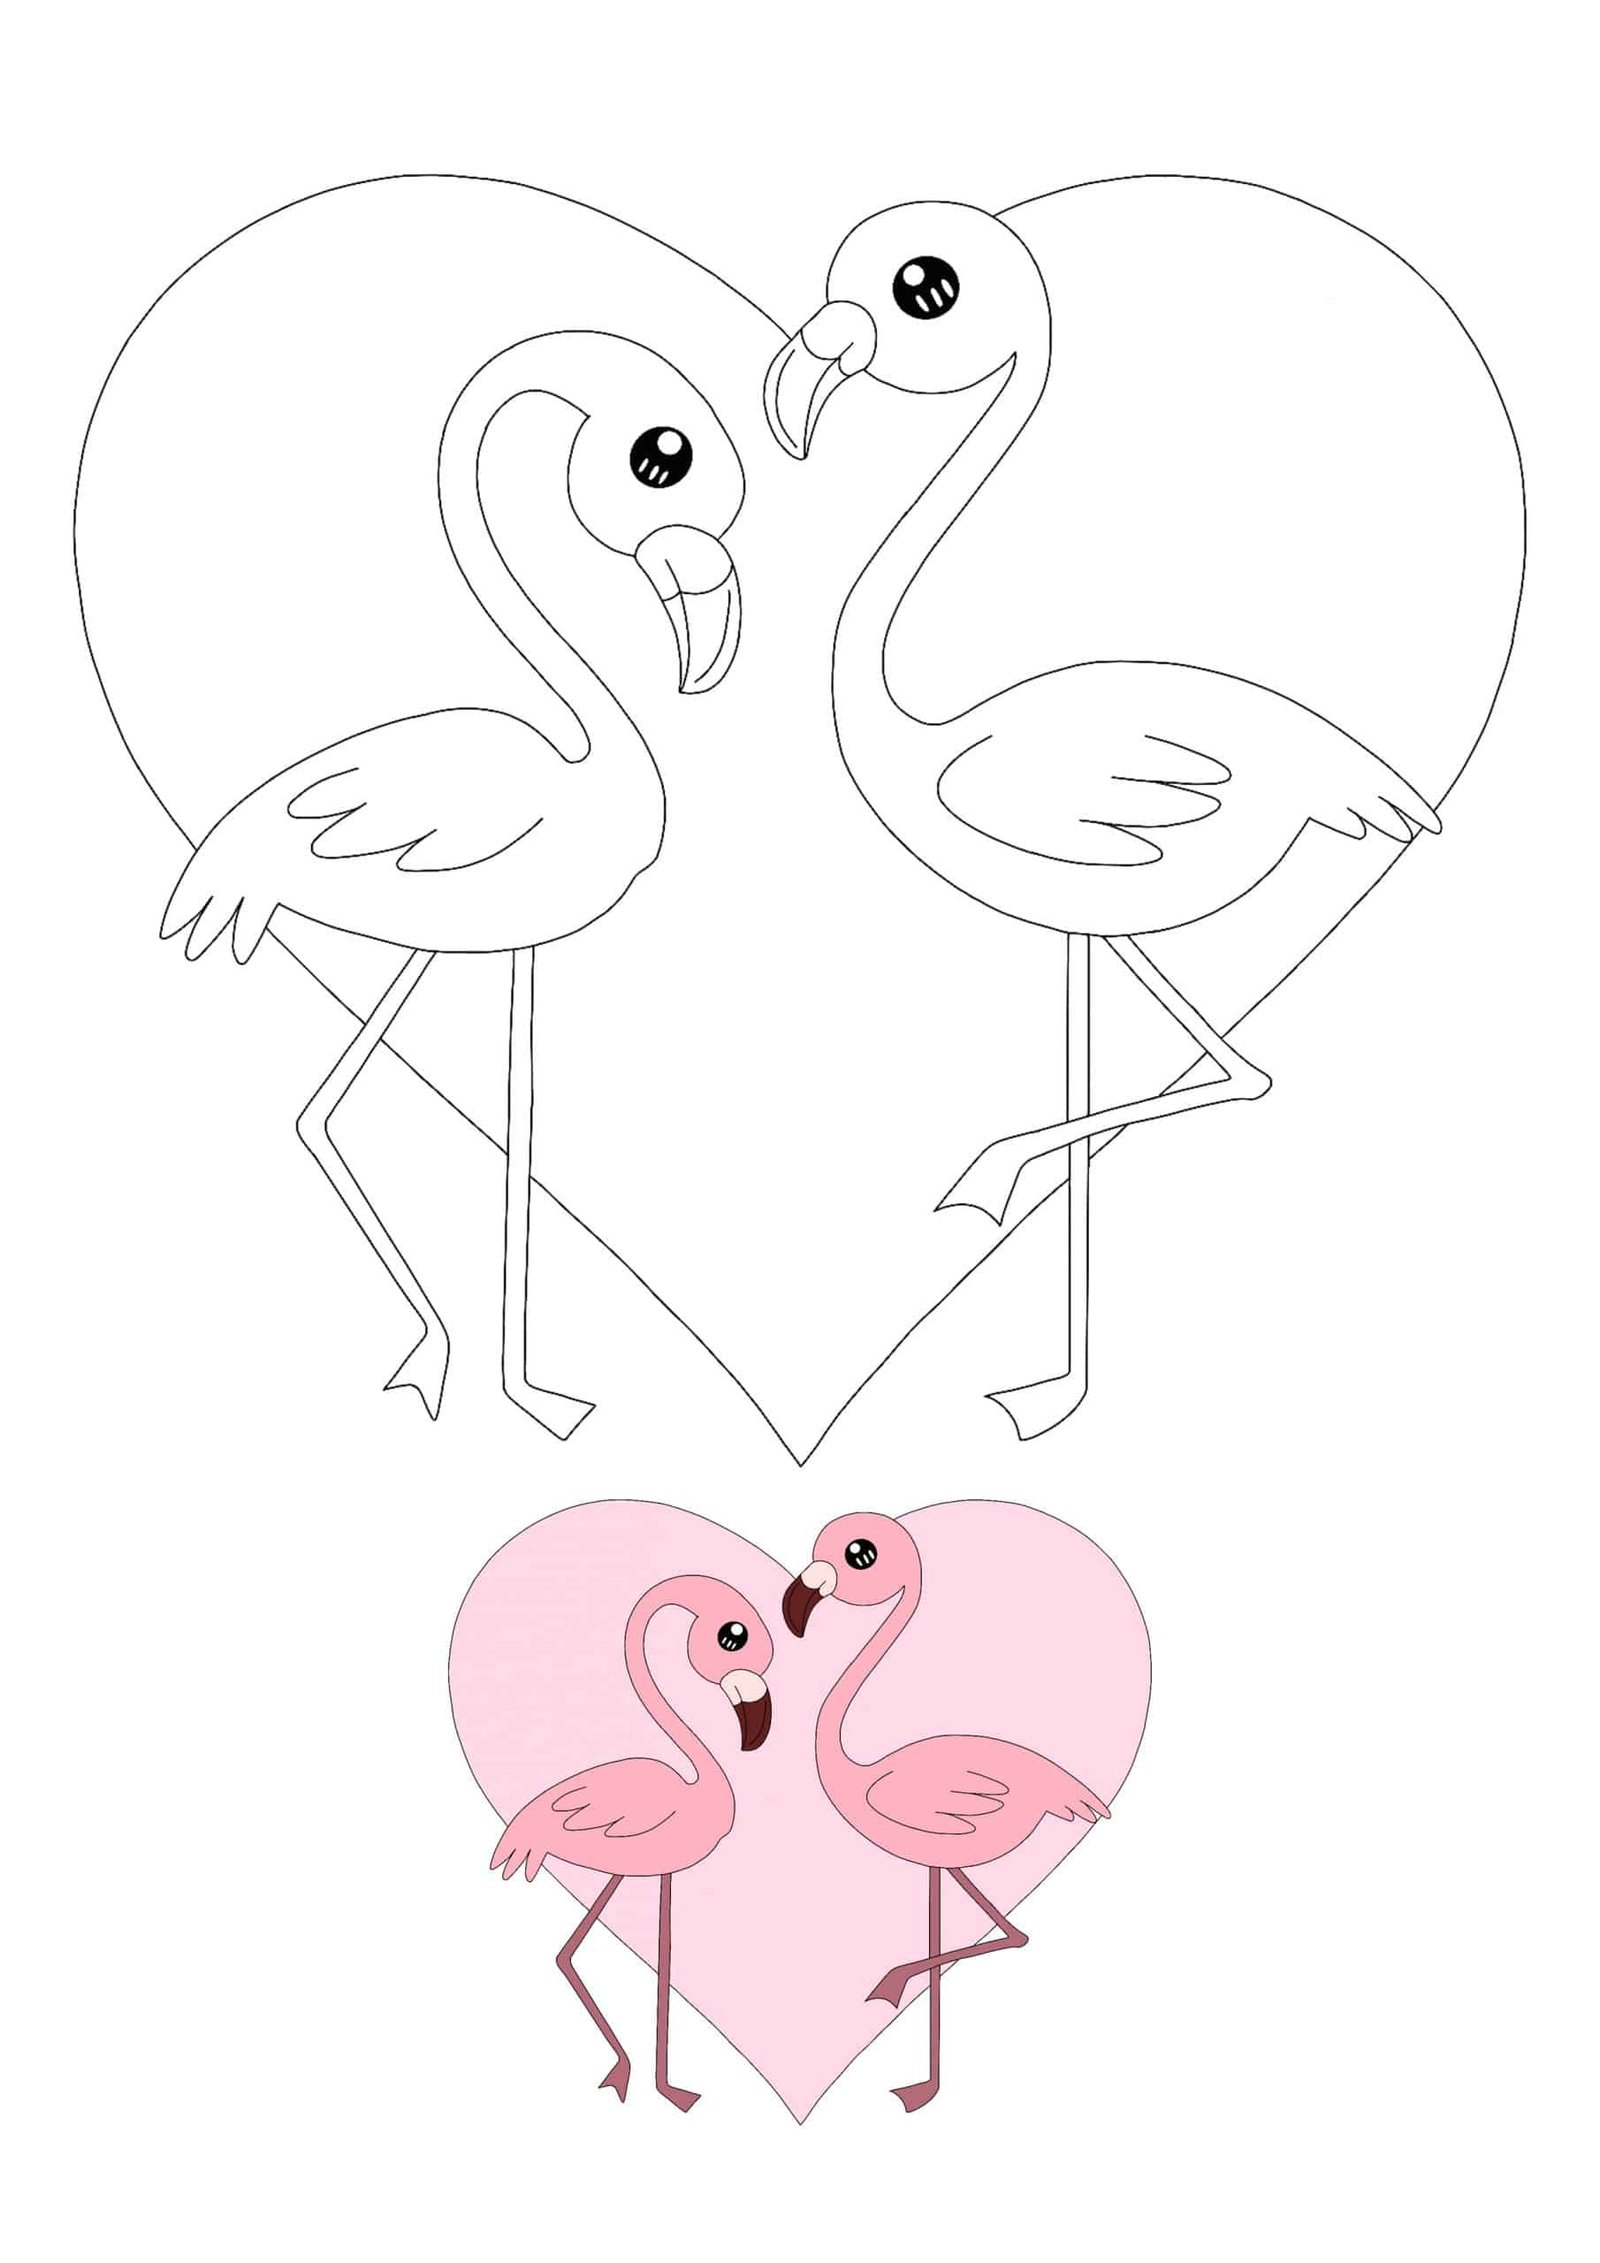 Two Kawaii Pink Flamingos coloring page with sample